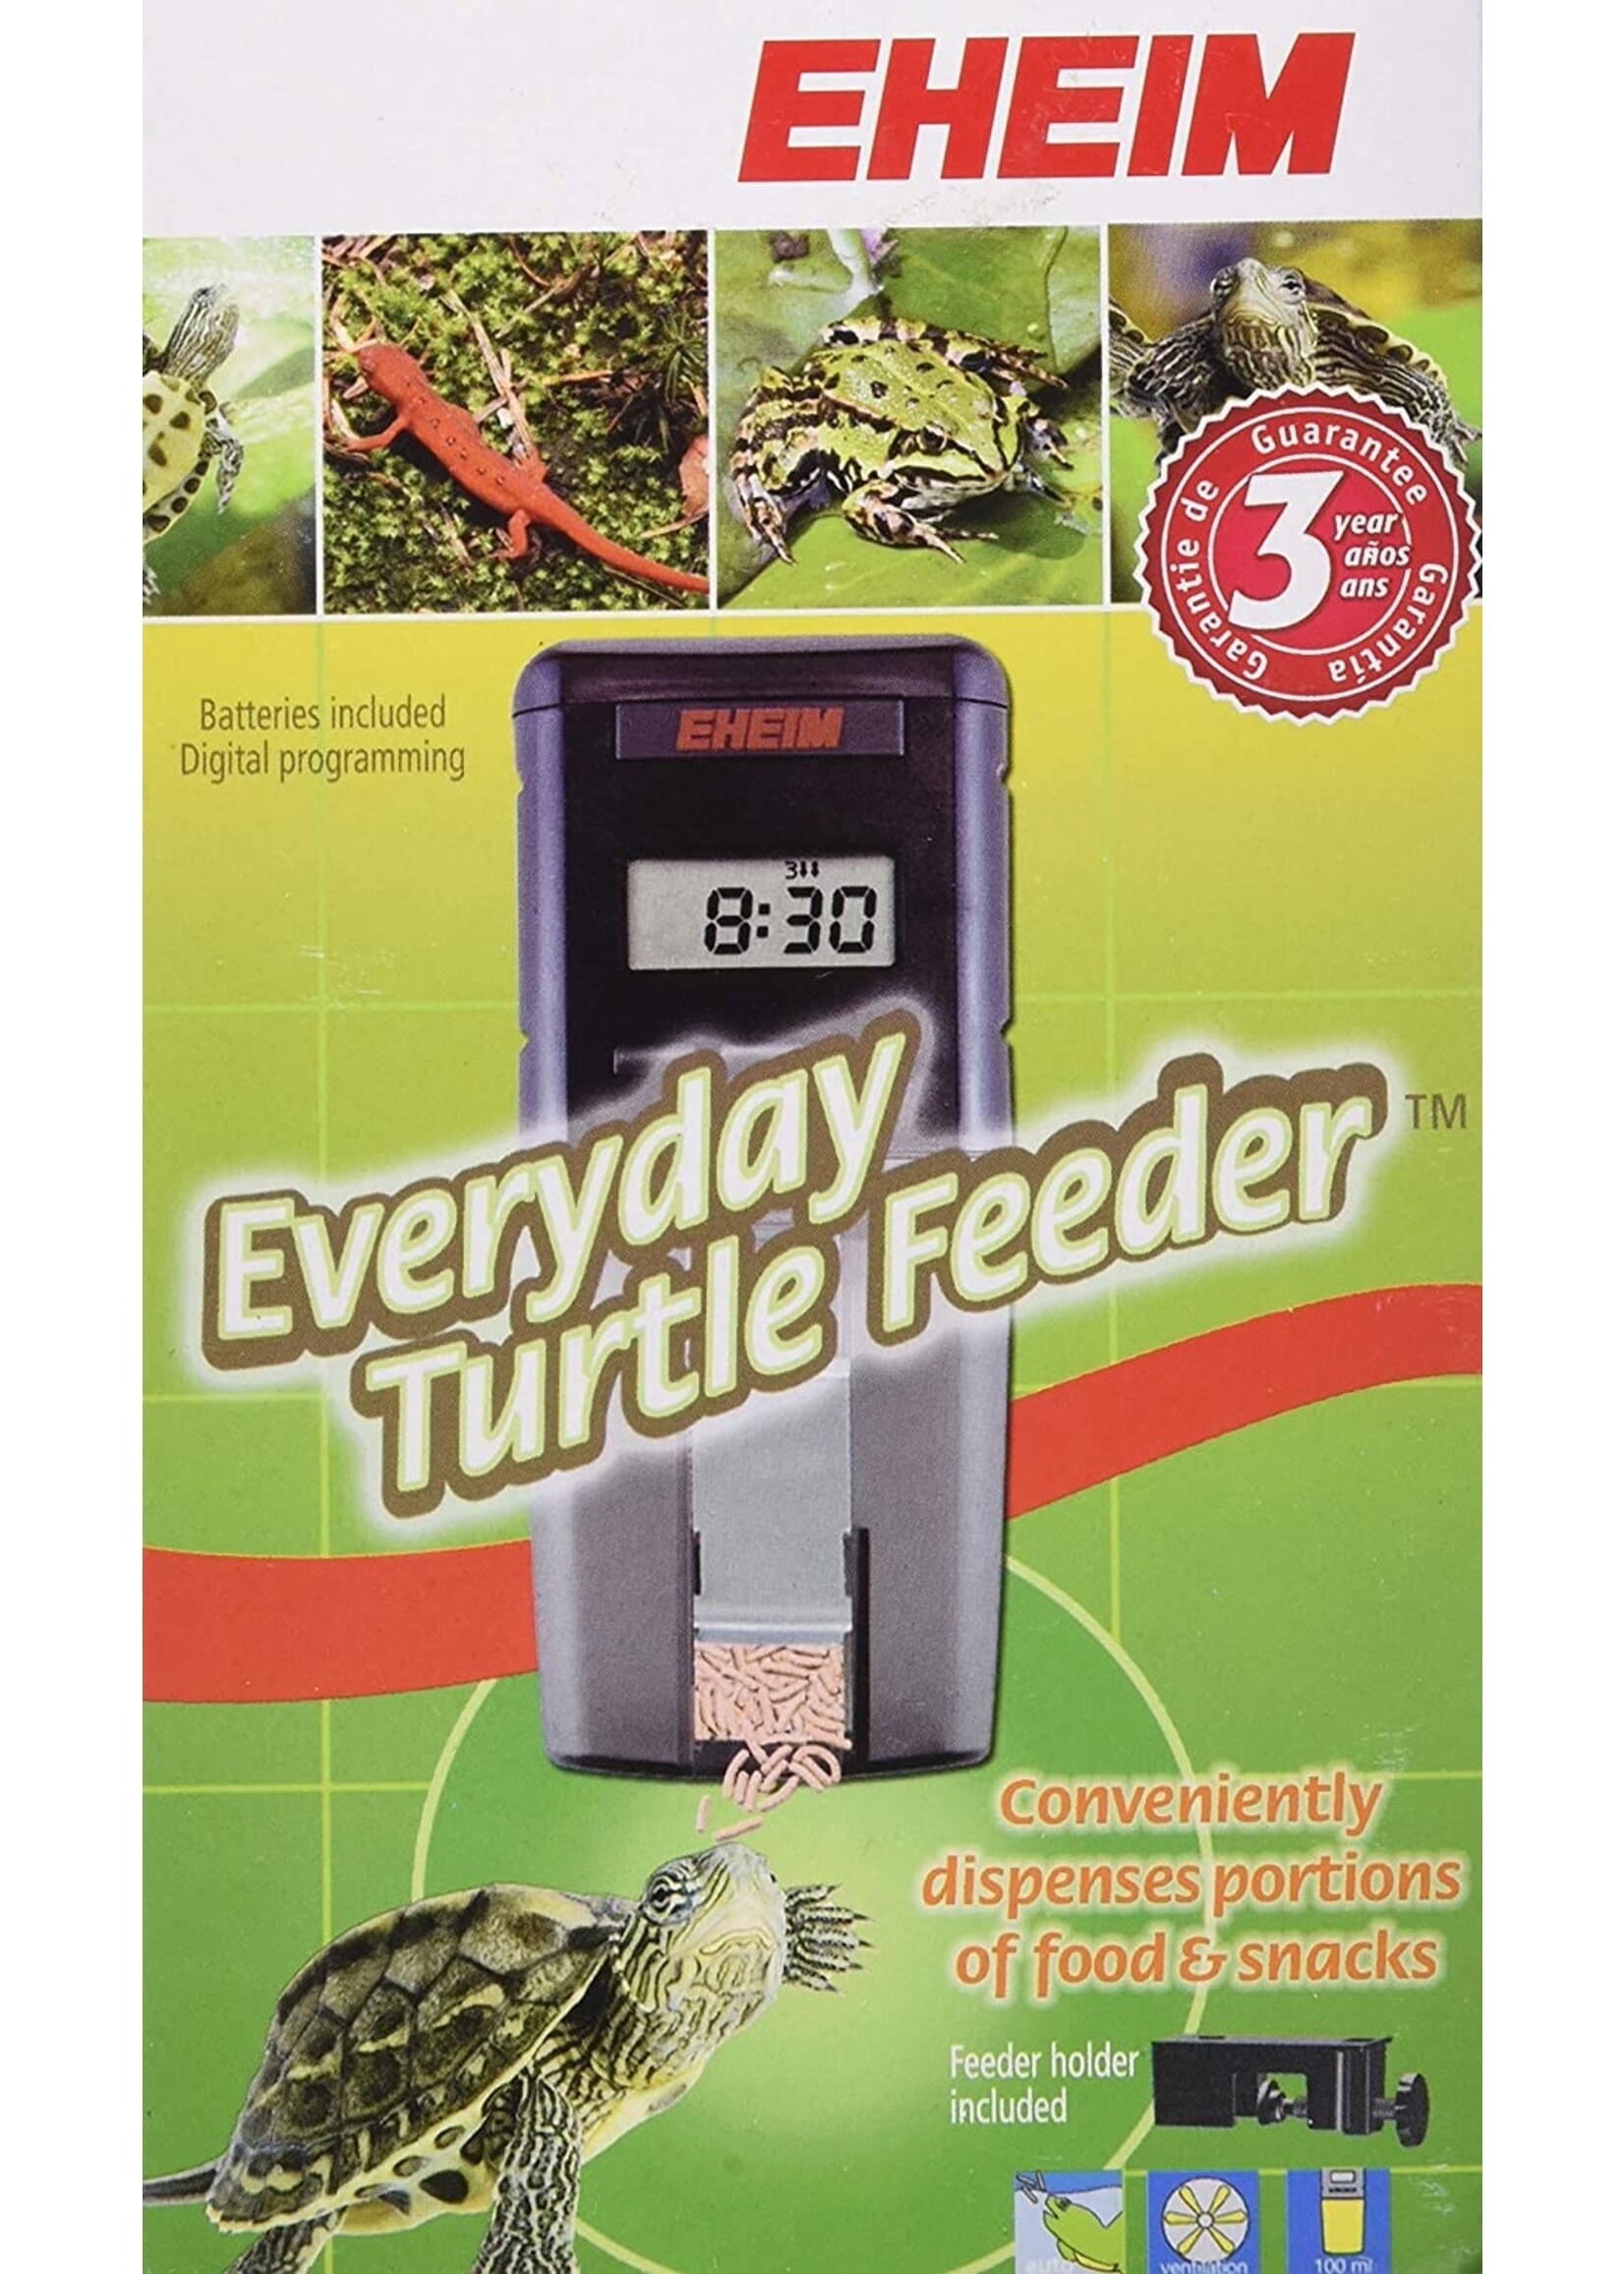 Eheim Turtle Automatic Feeder